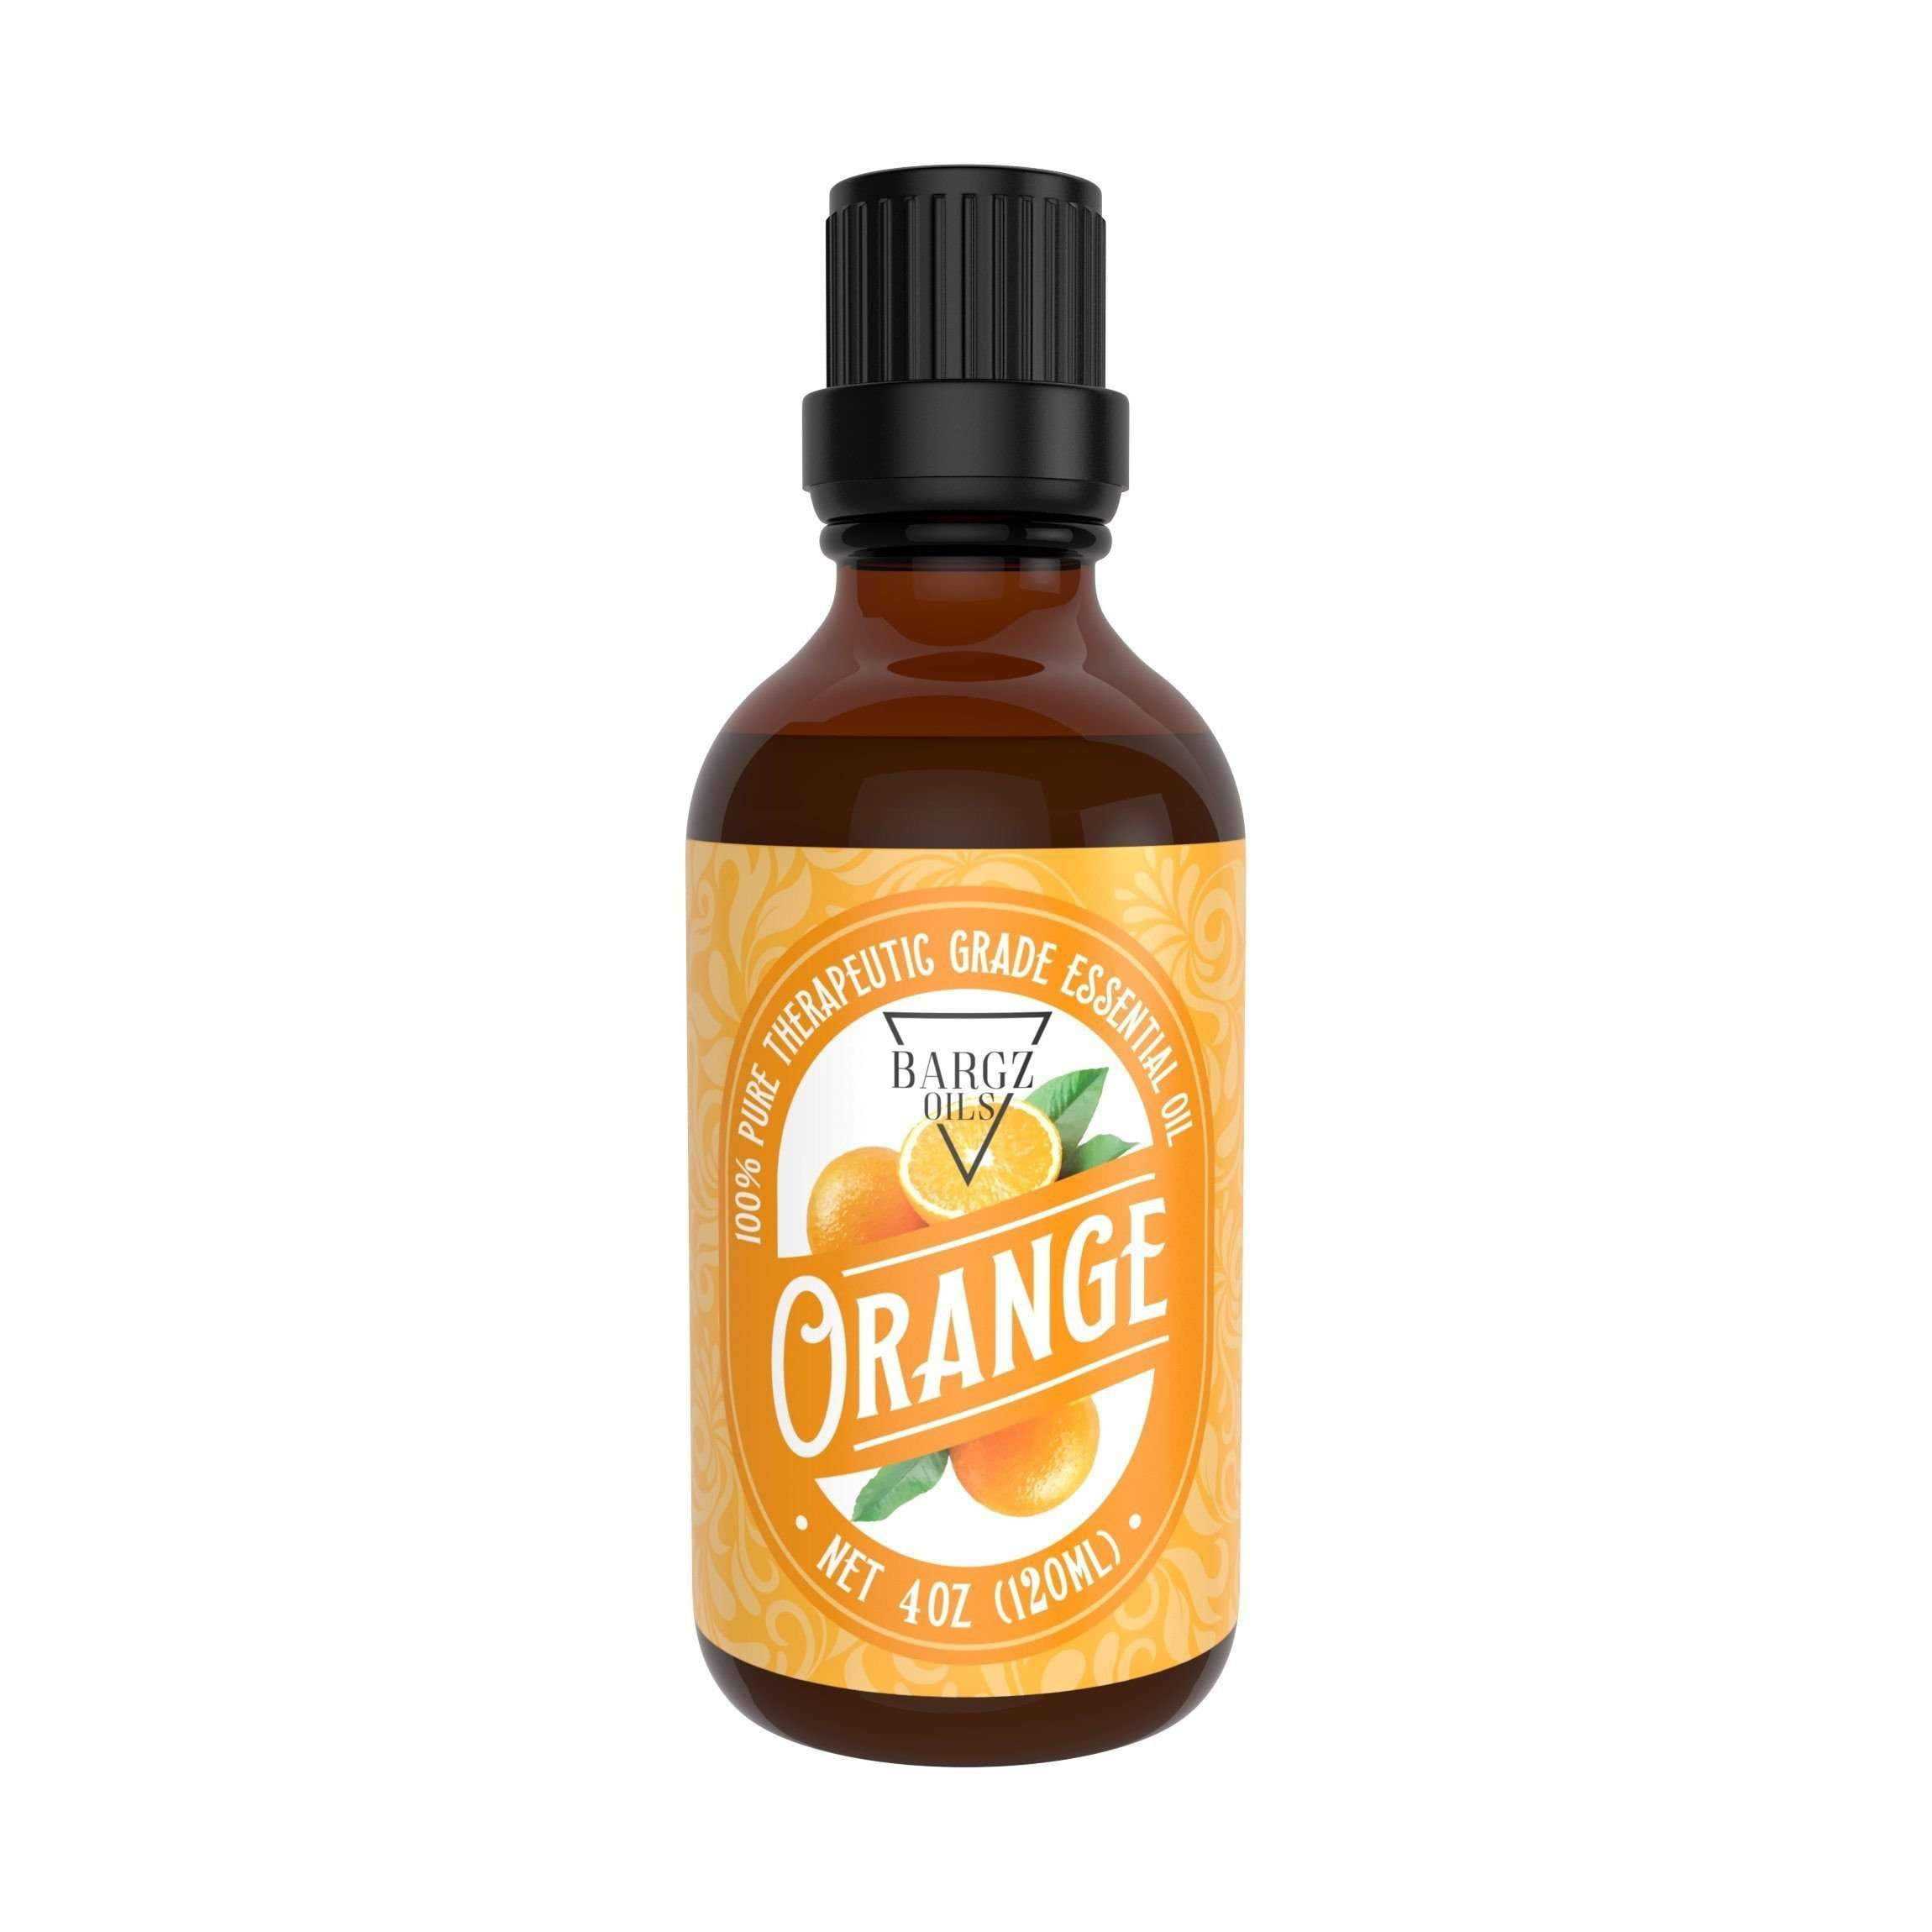 Sweet Orange Oil for Wrinkles, Acne, Dark Spots and More!! - Satt Naturals